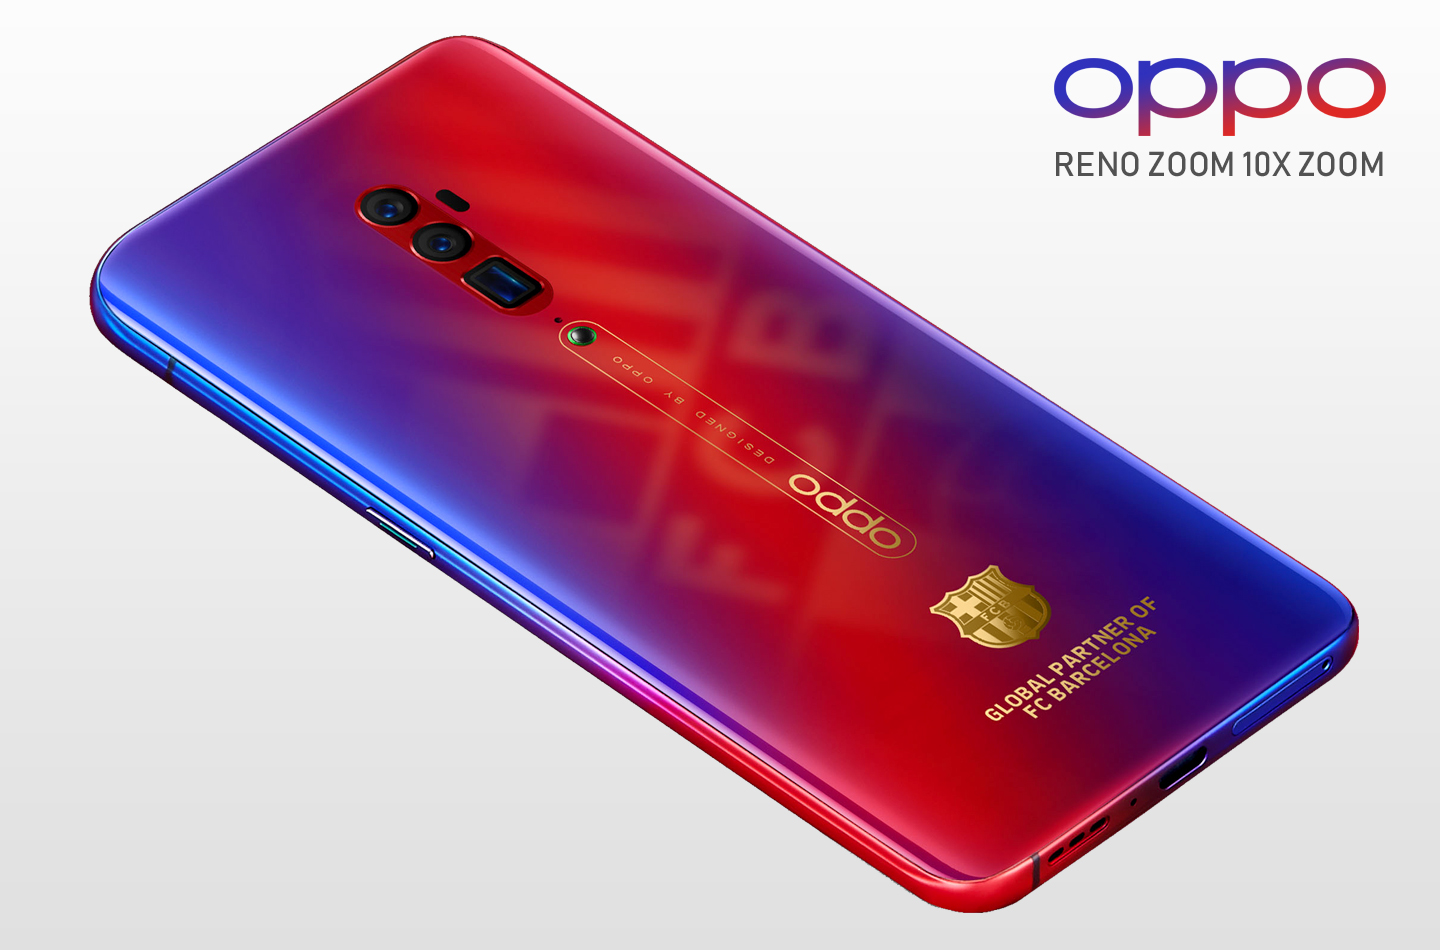 Oppo Reno Limited Edition smartphone met 10x Zoom LetsGoDigital